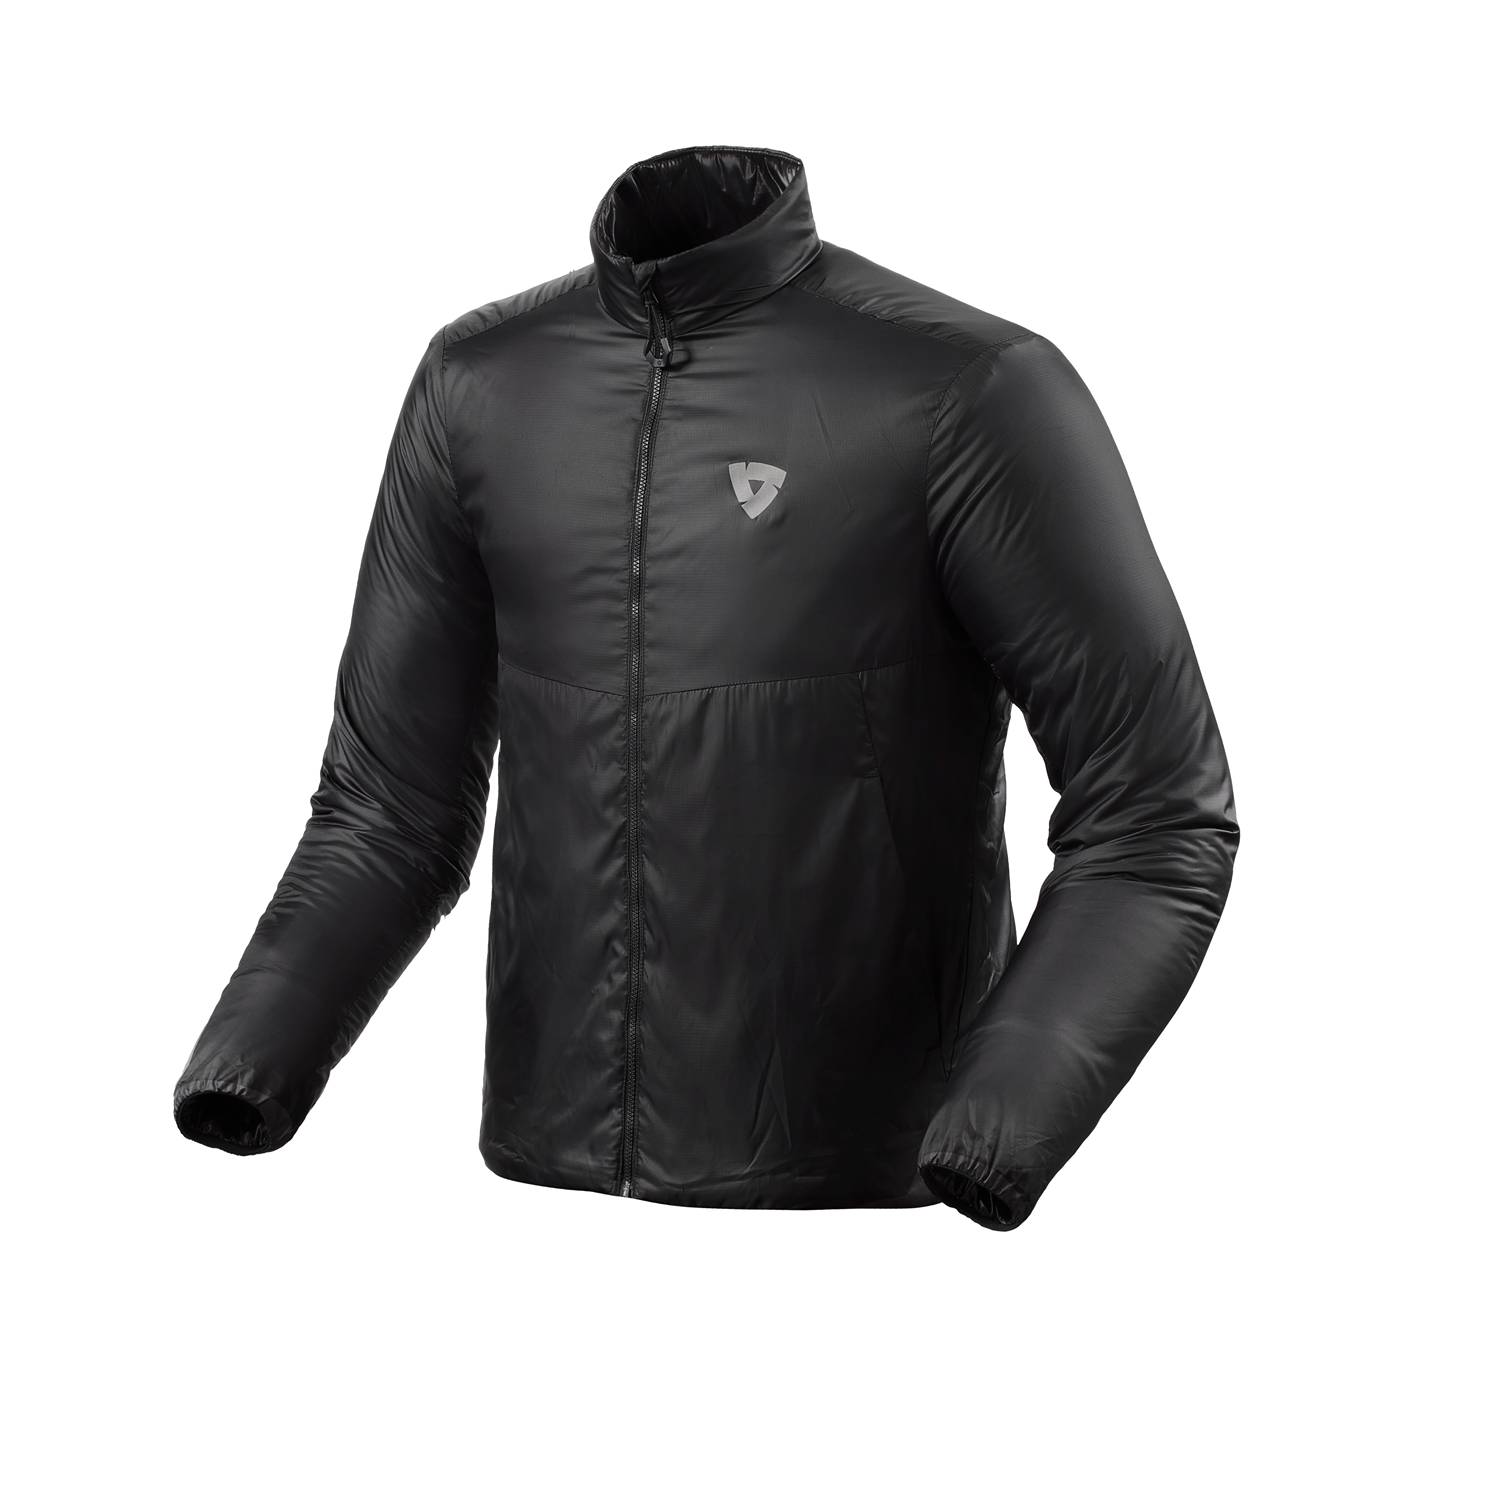 Image of REV'IT! Core 2 Mid Layer Jacket Black Größe L